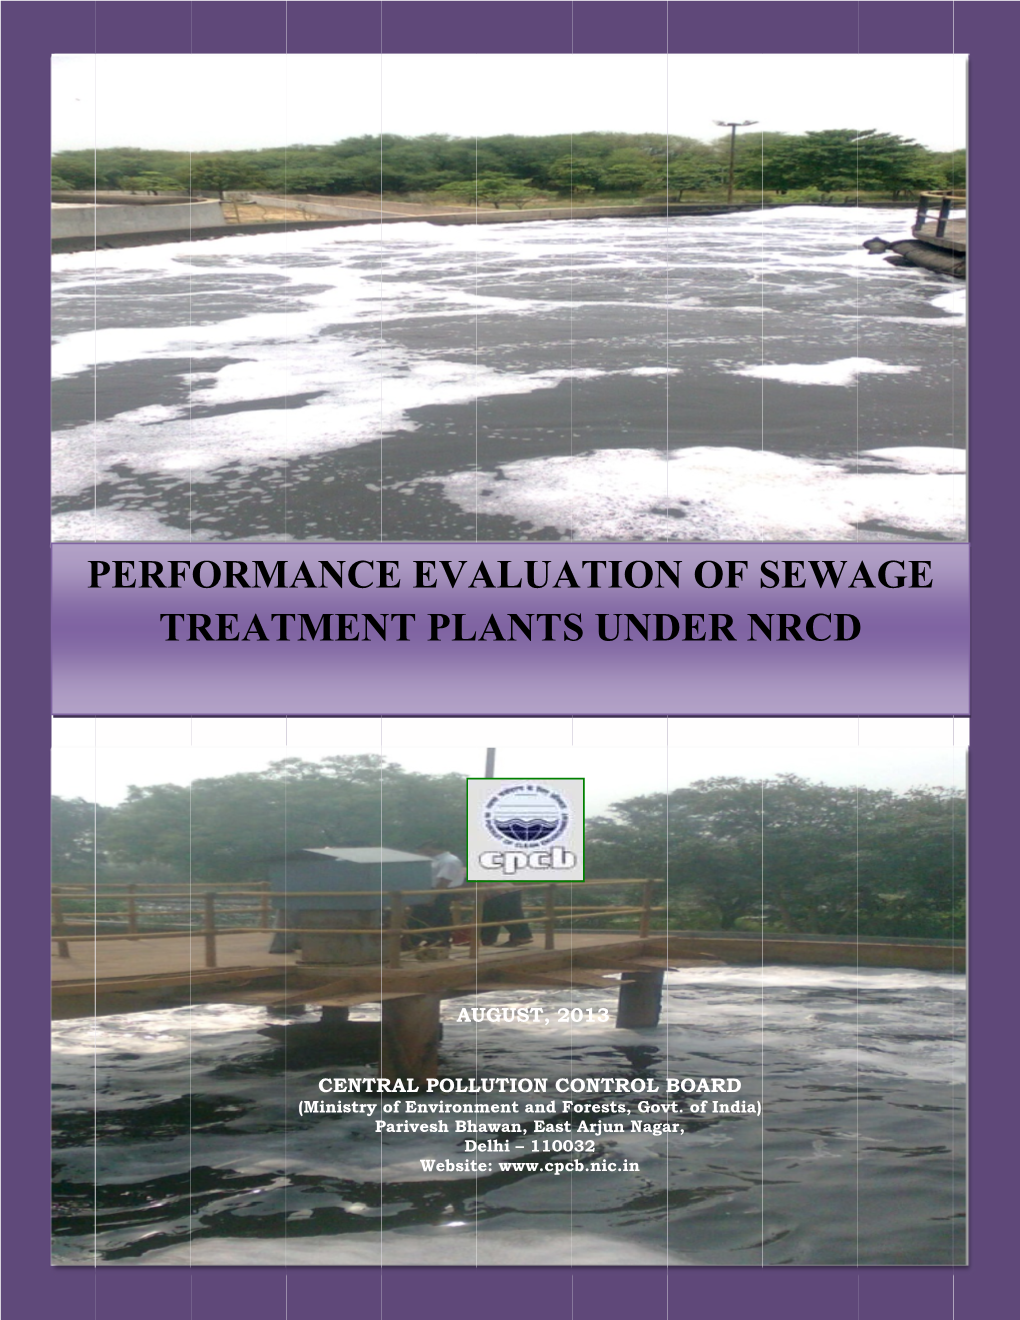 Performance Evaluation of Sewage Treatmnet Plants Under NRCD